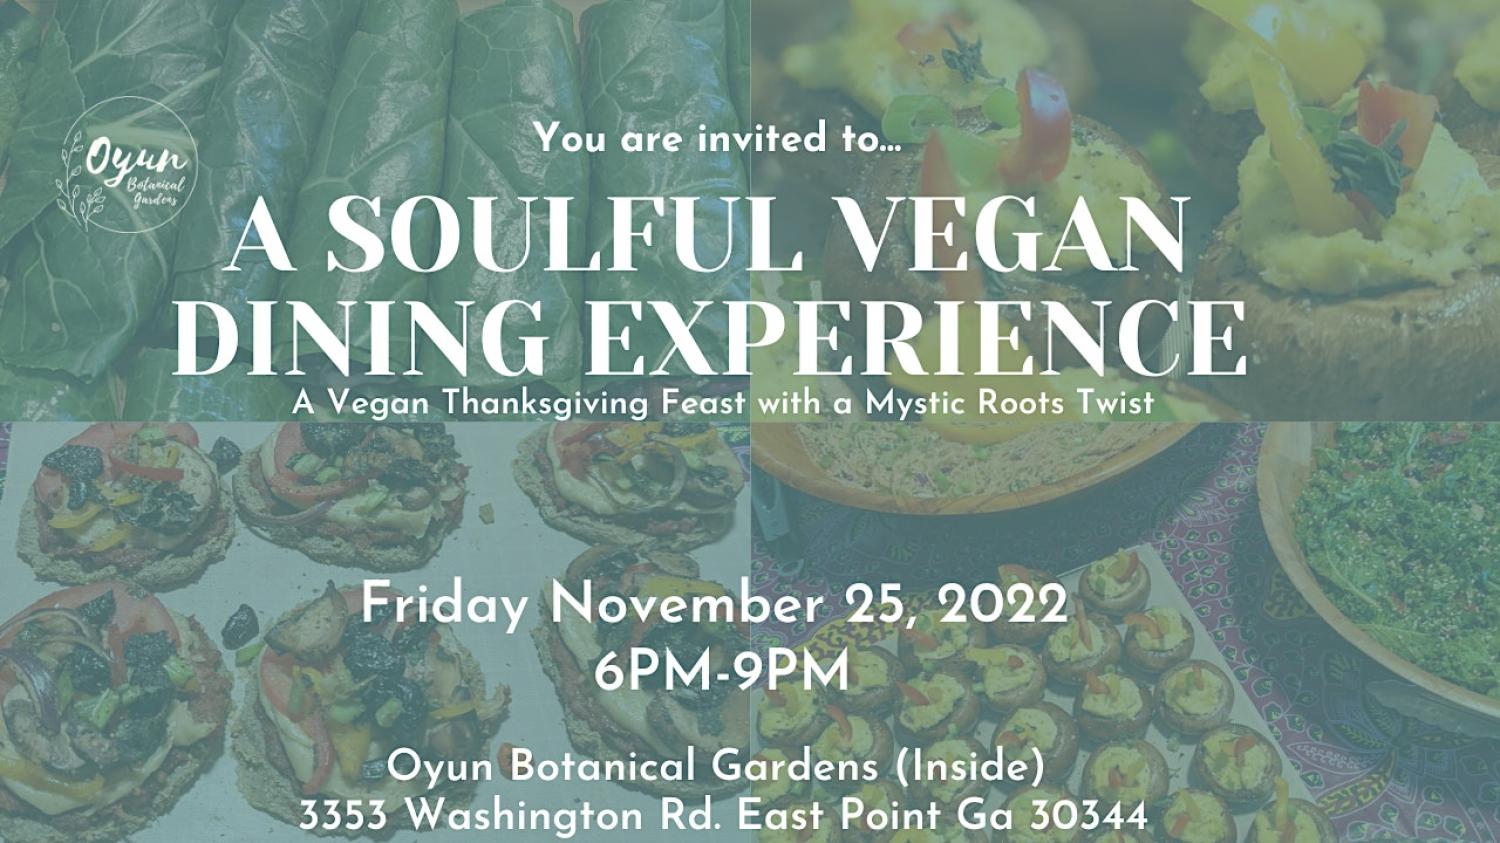 A Soulful Vegan Feast with Mystic Roots
Fri Nov 25, 6:00 PM - Fri Nov 25, 9:00 PM
in 38 days